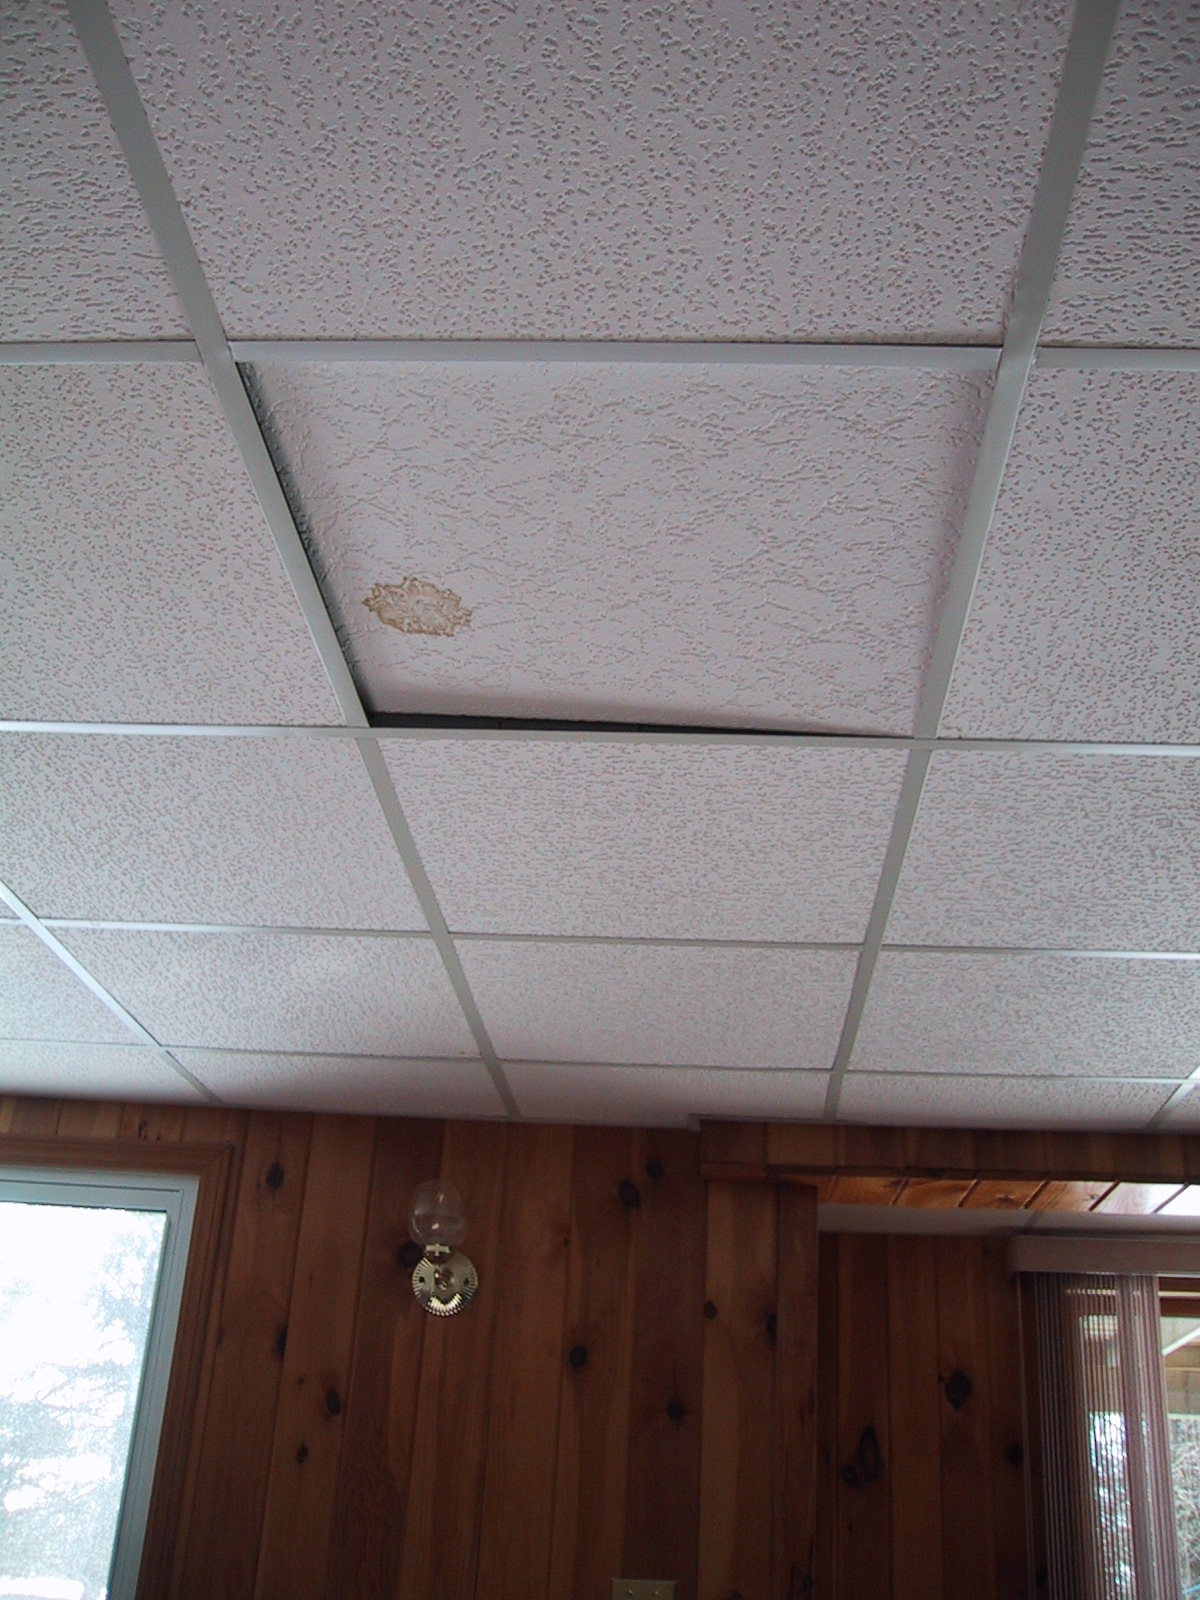 Tile Ceiling For Basement Tile Ceiling For Basement basement ceiling leak part 1 the discovery 1200 X 1600